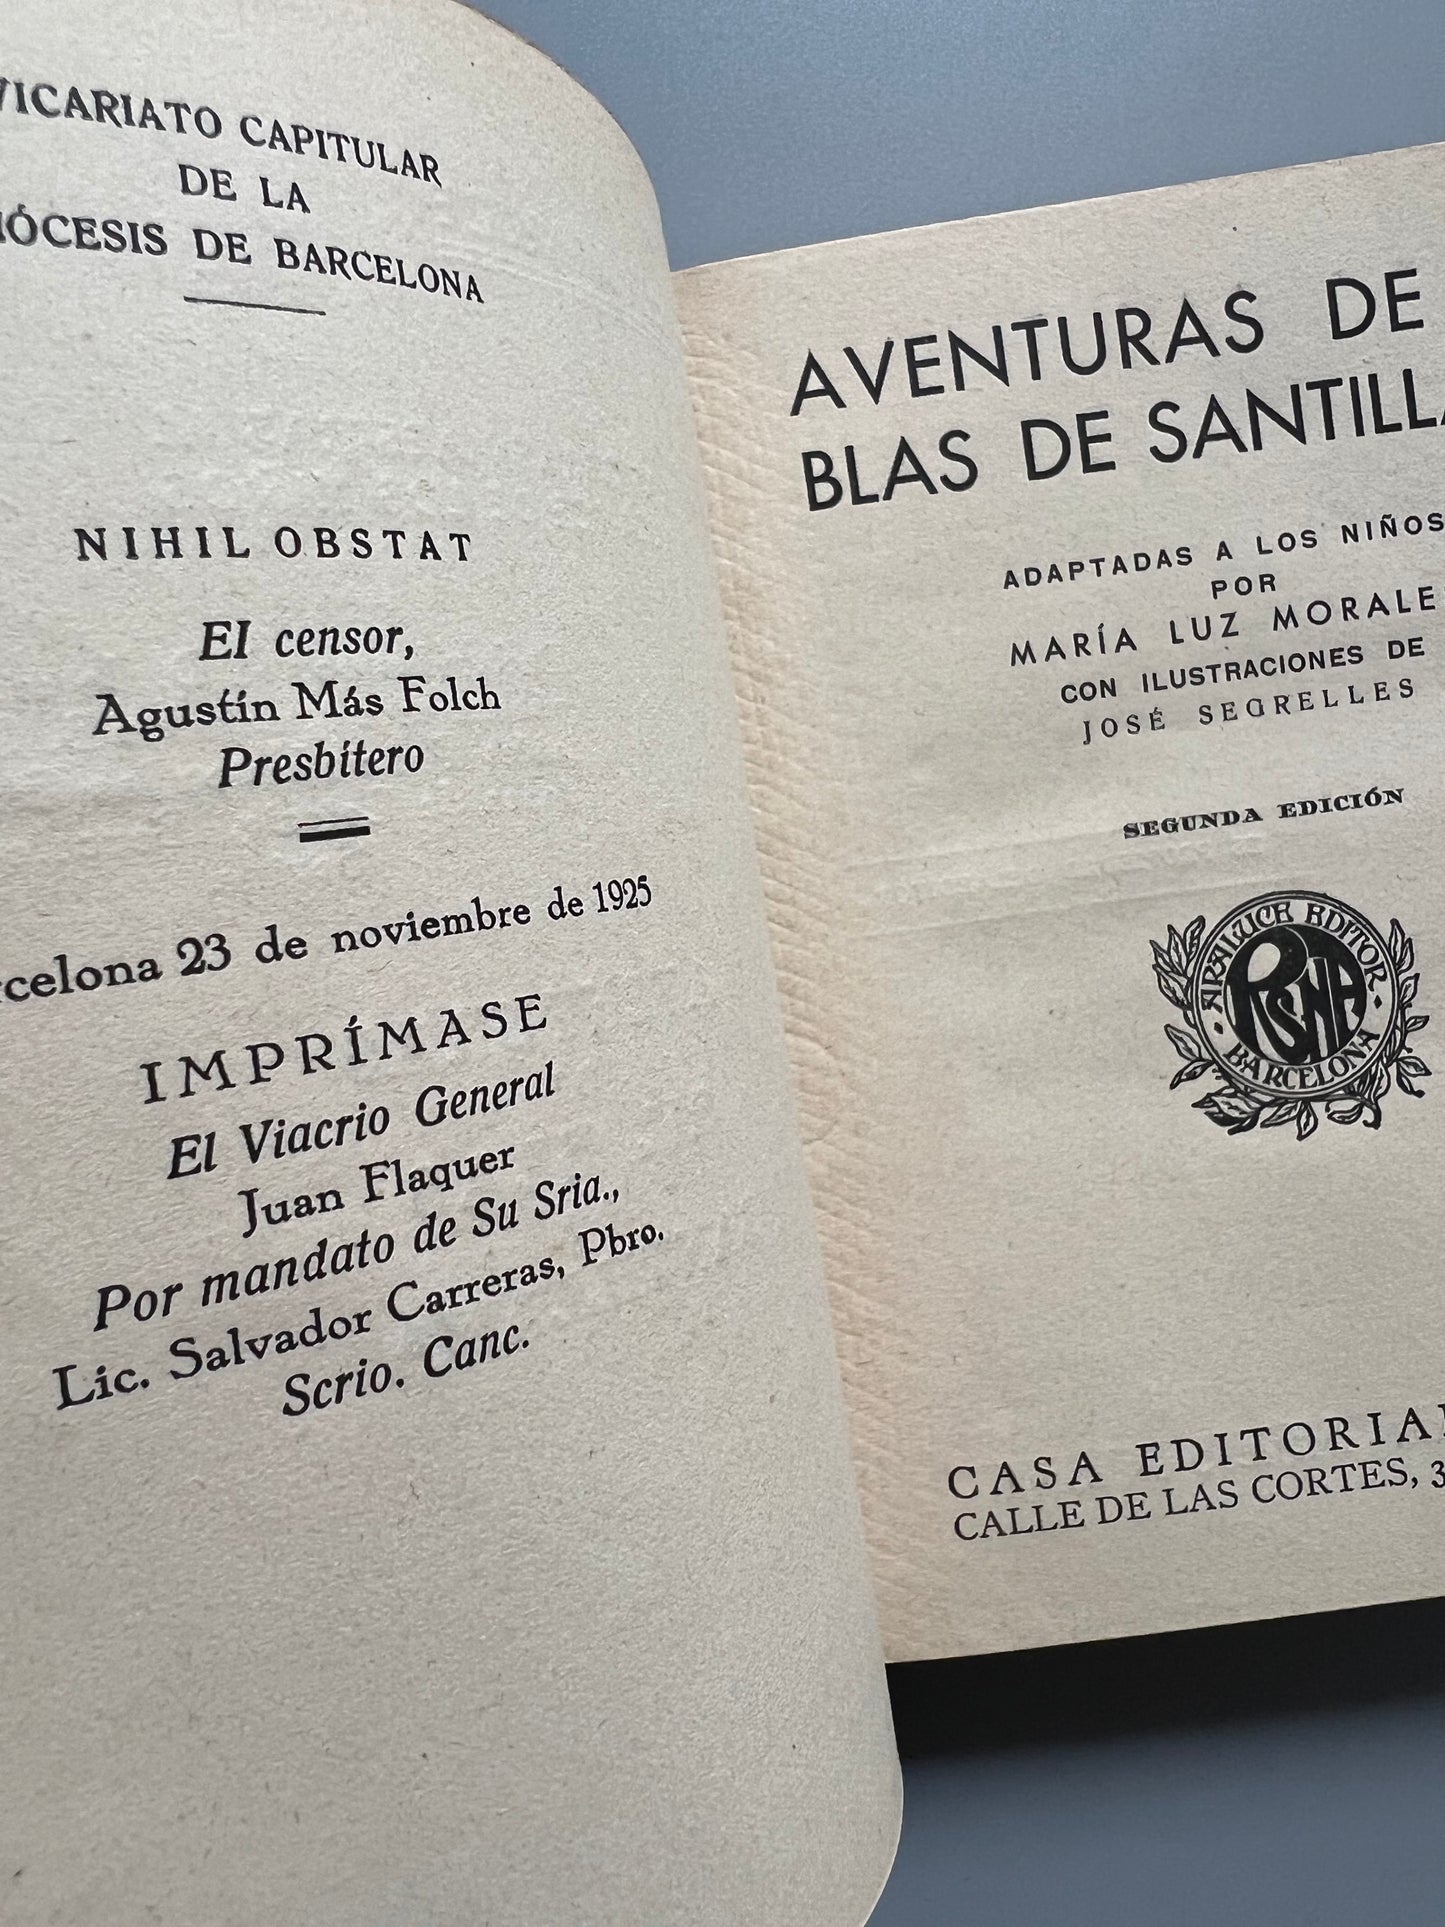 Gil Blas de Santillana, Lesage - Casa editorial Araluce, ca. 1935